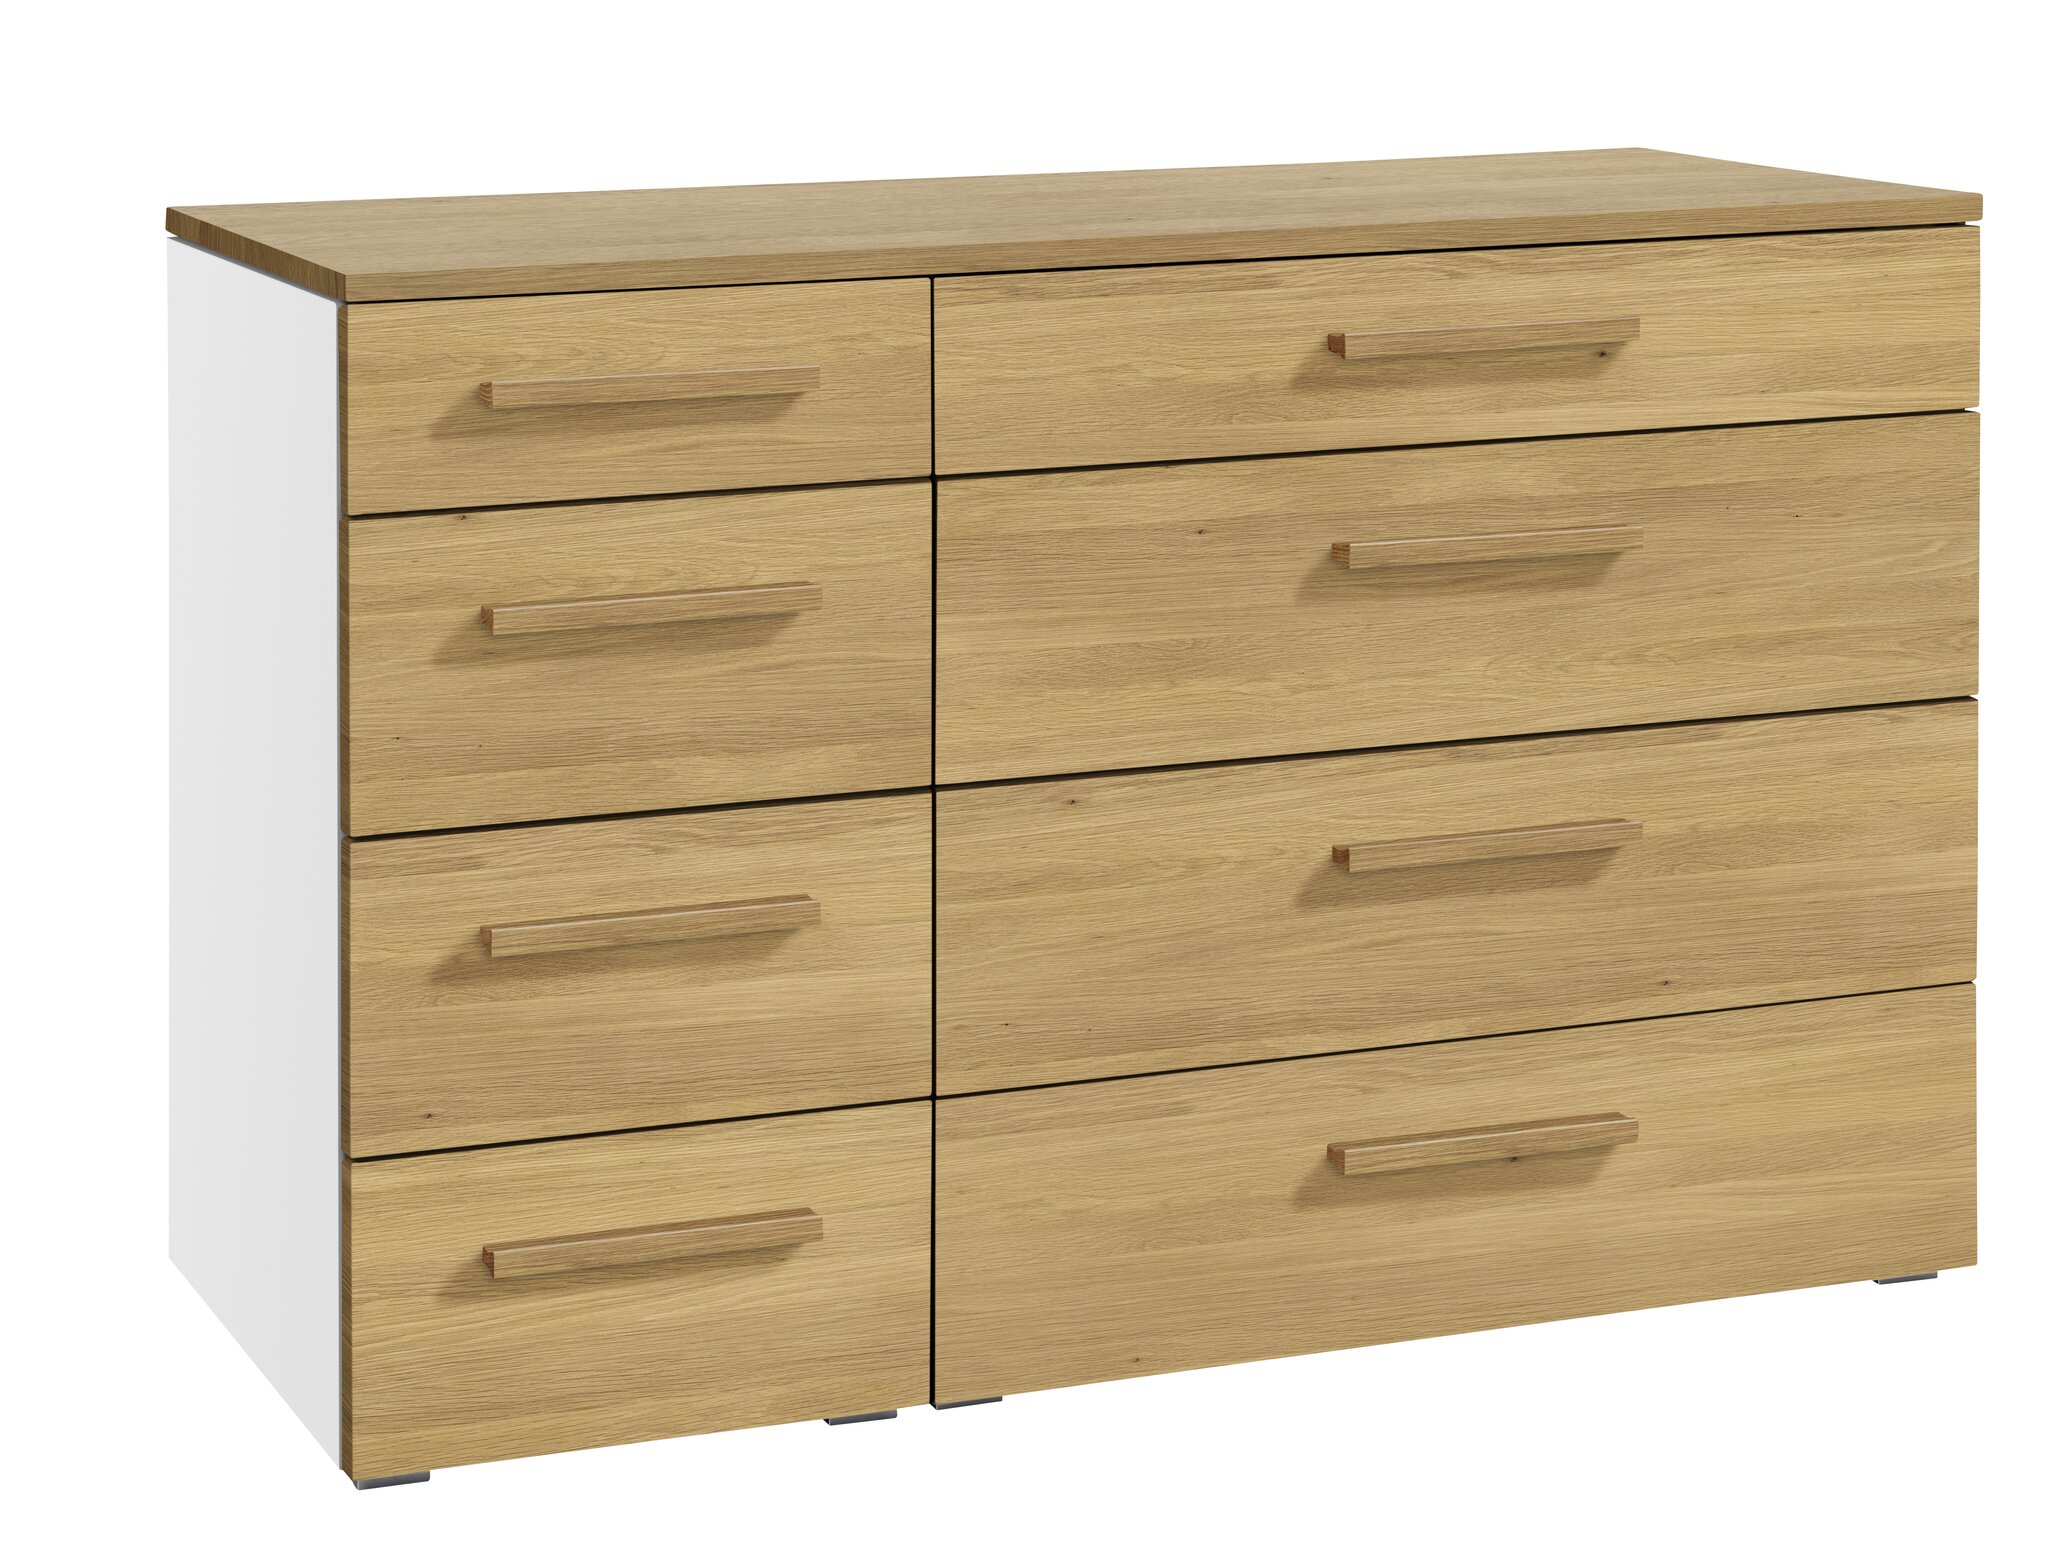 Cassino chest of drawers